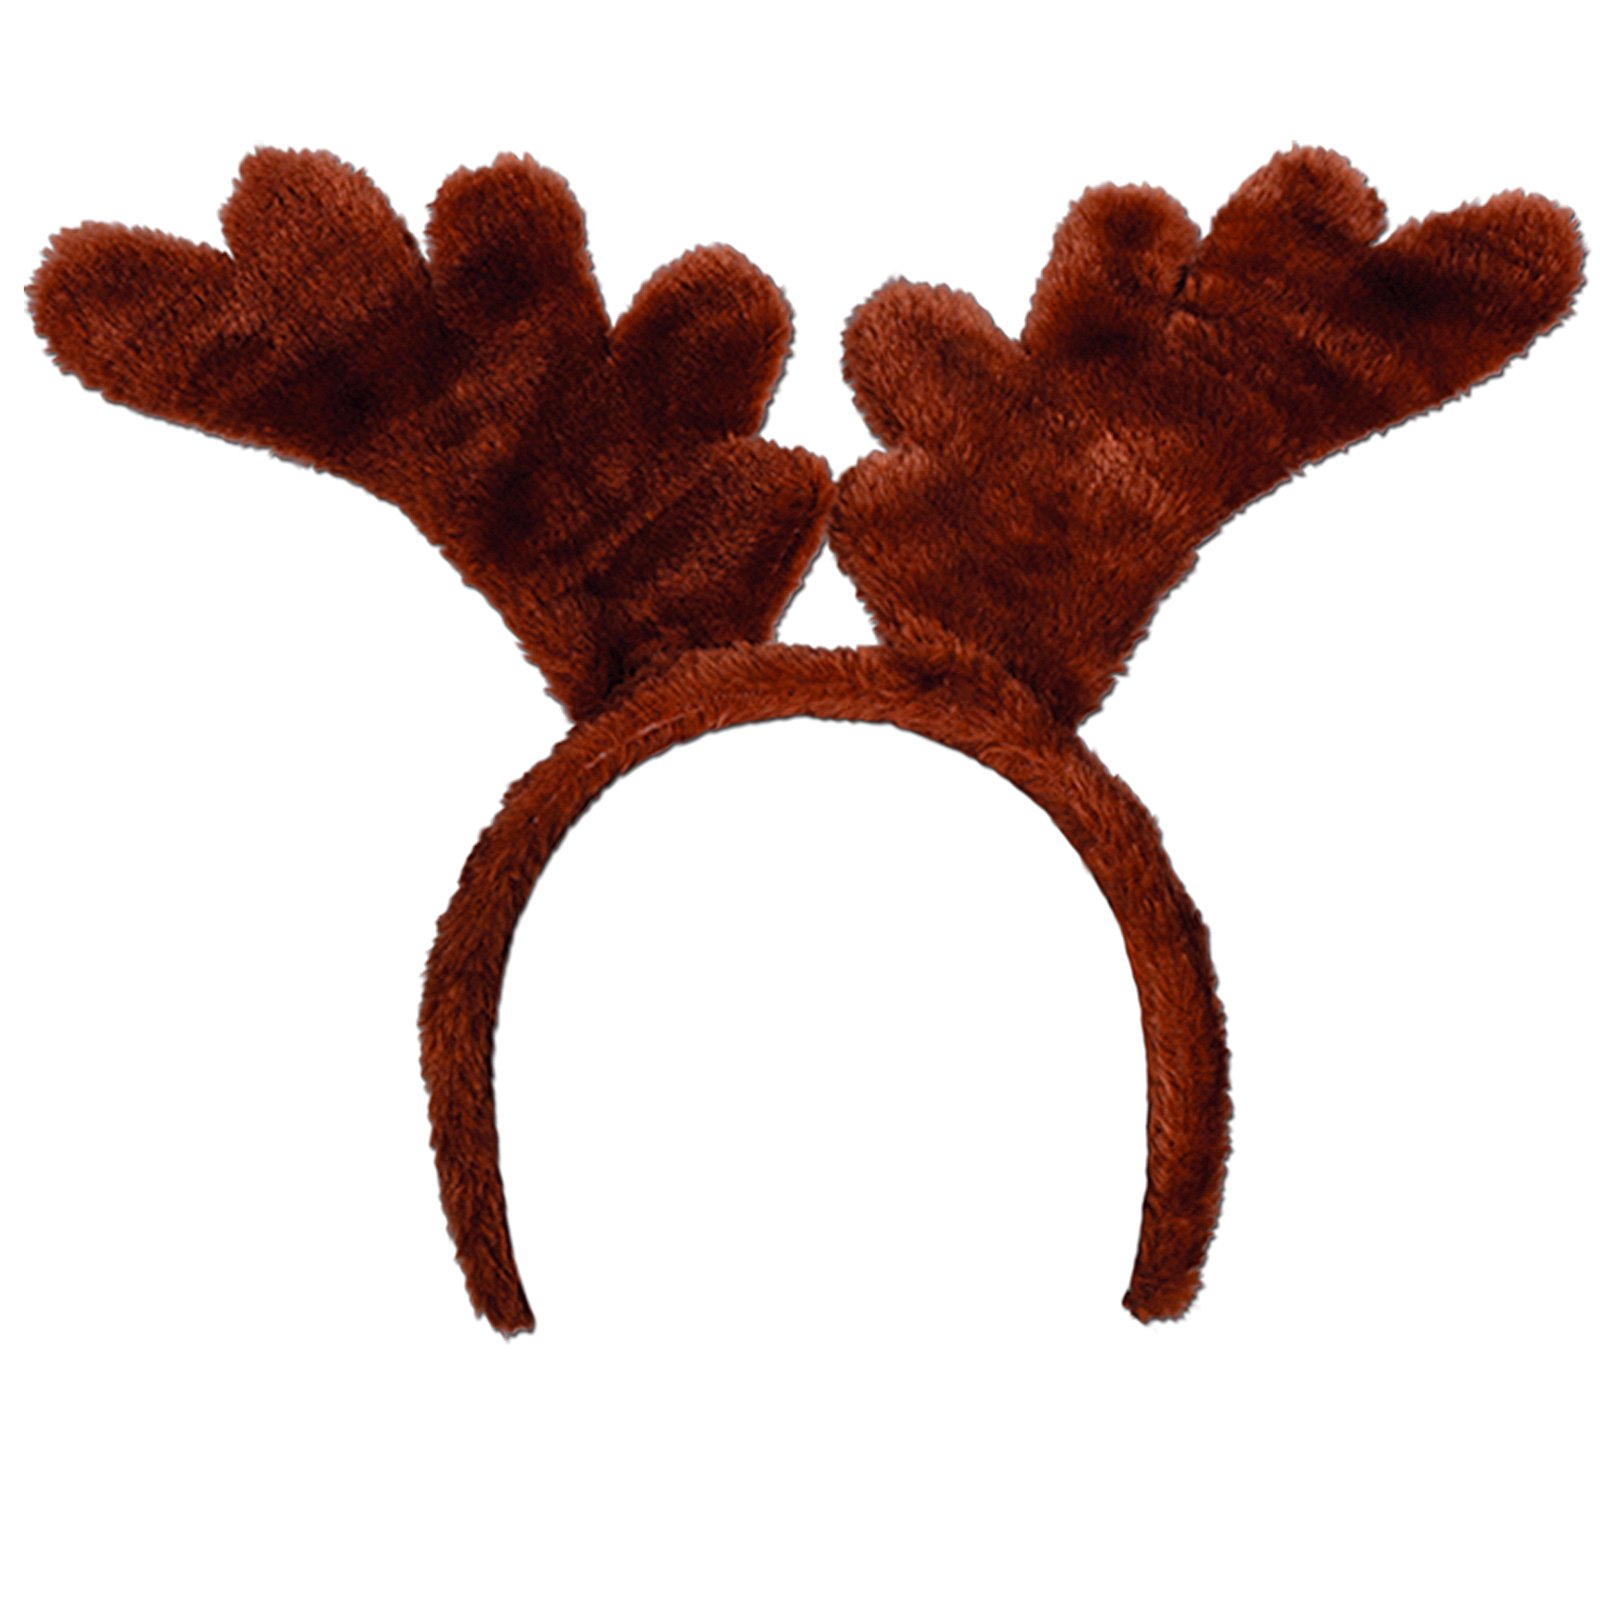 Festive reindeer antlers clipart transparent background 